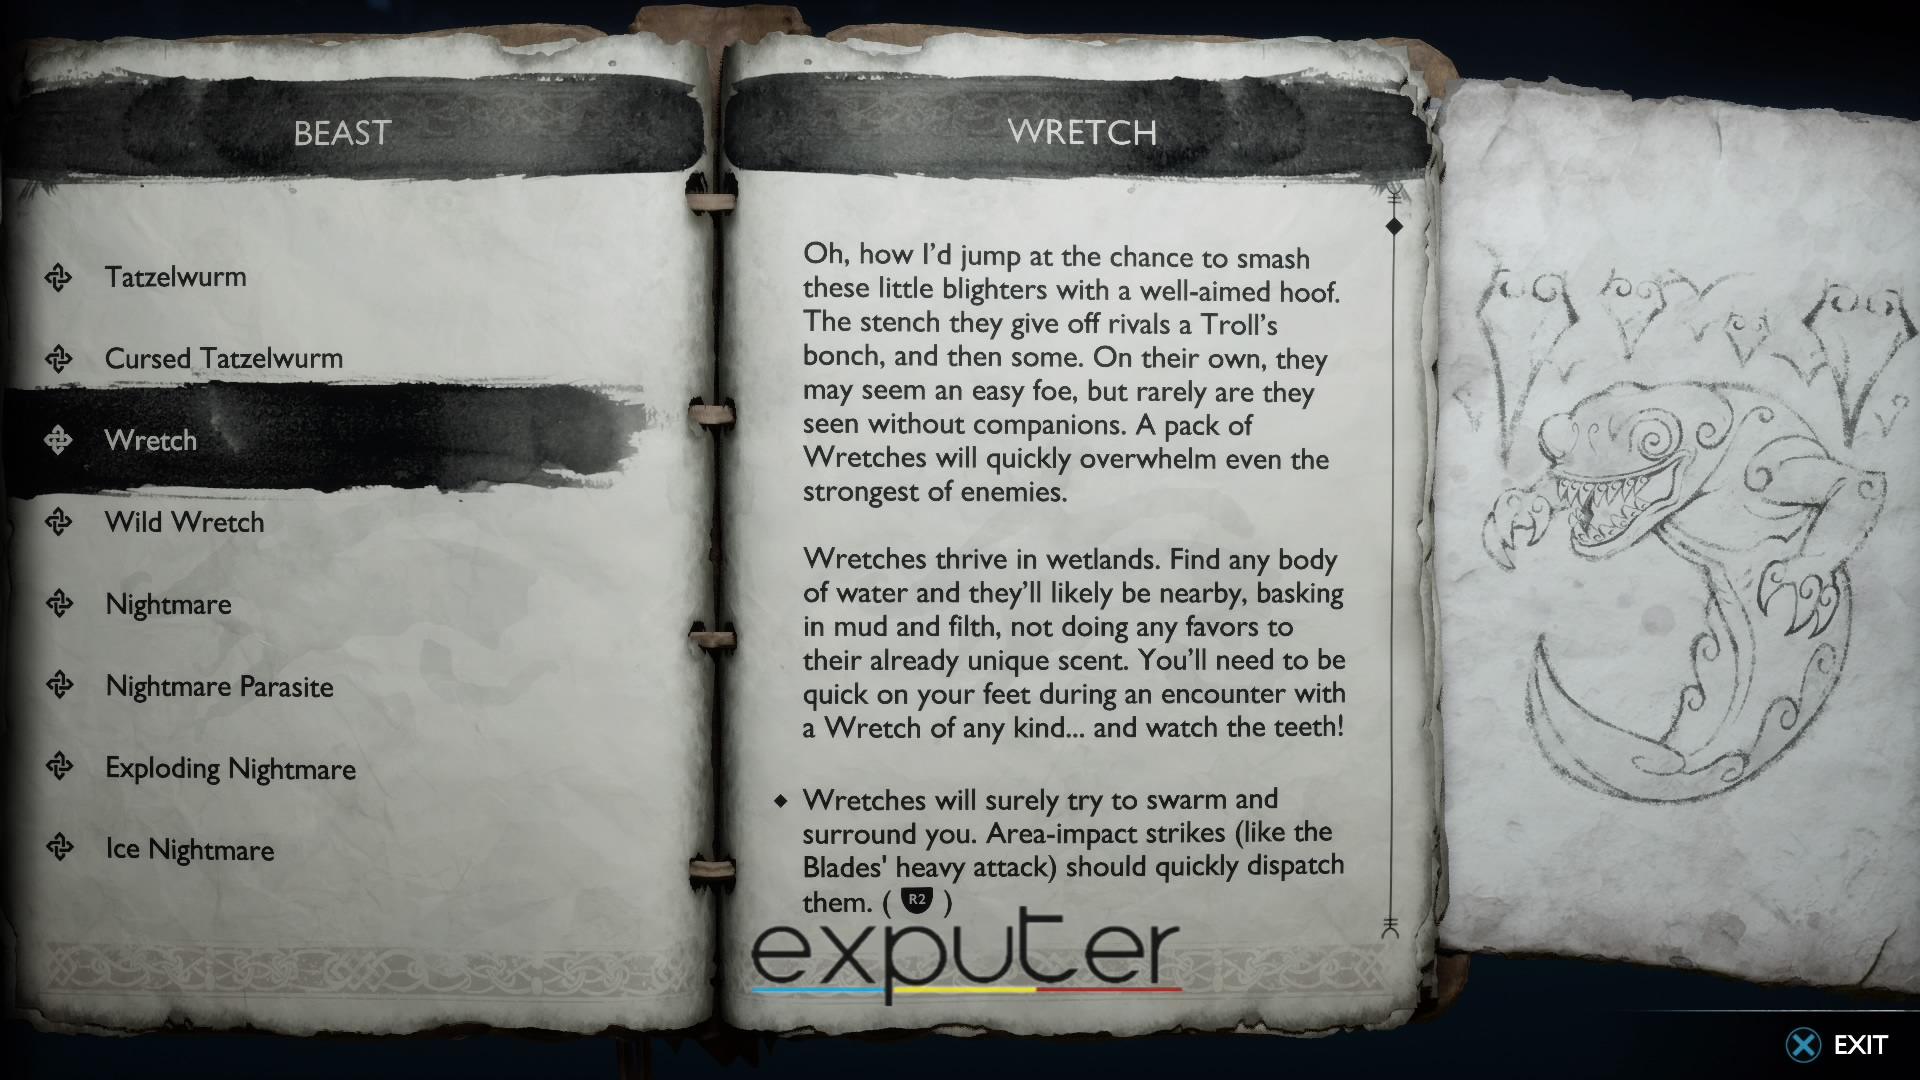 Showcasing the Wretch in the Codex